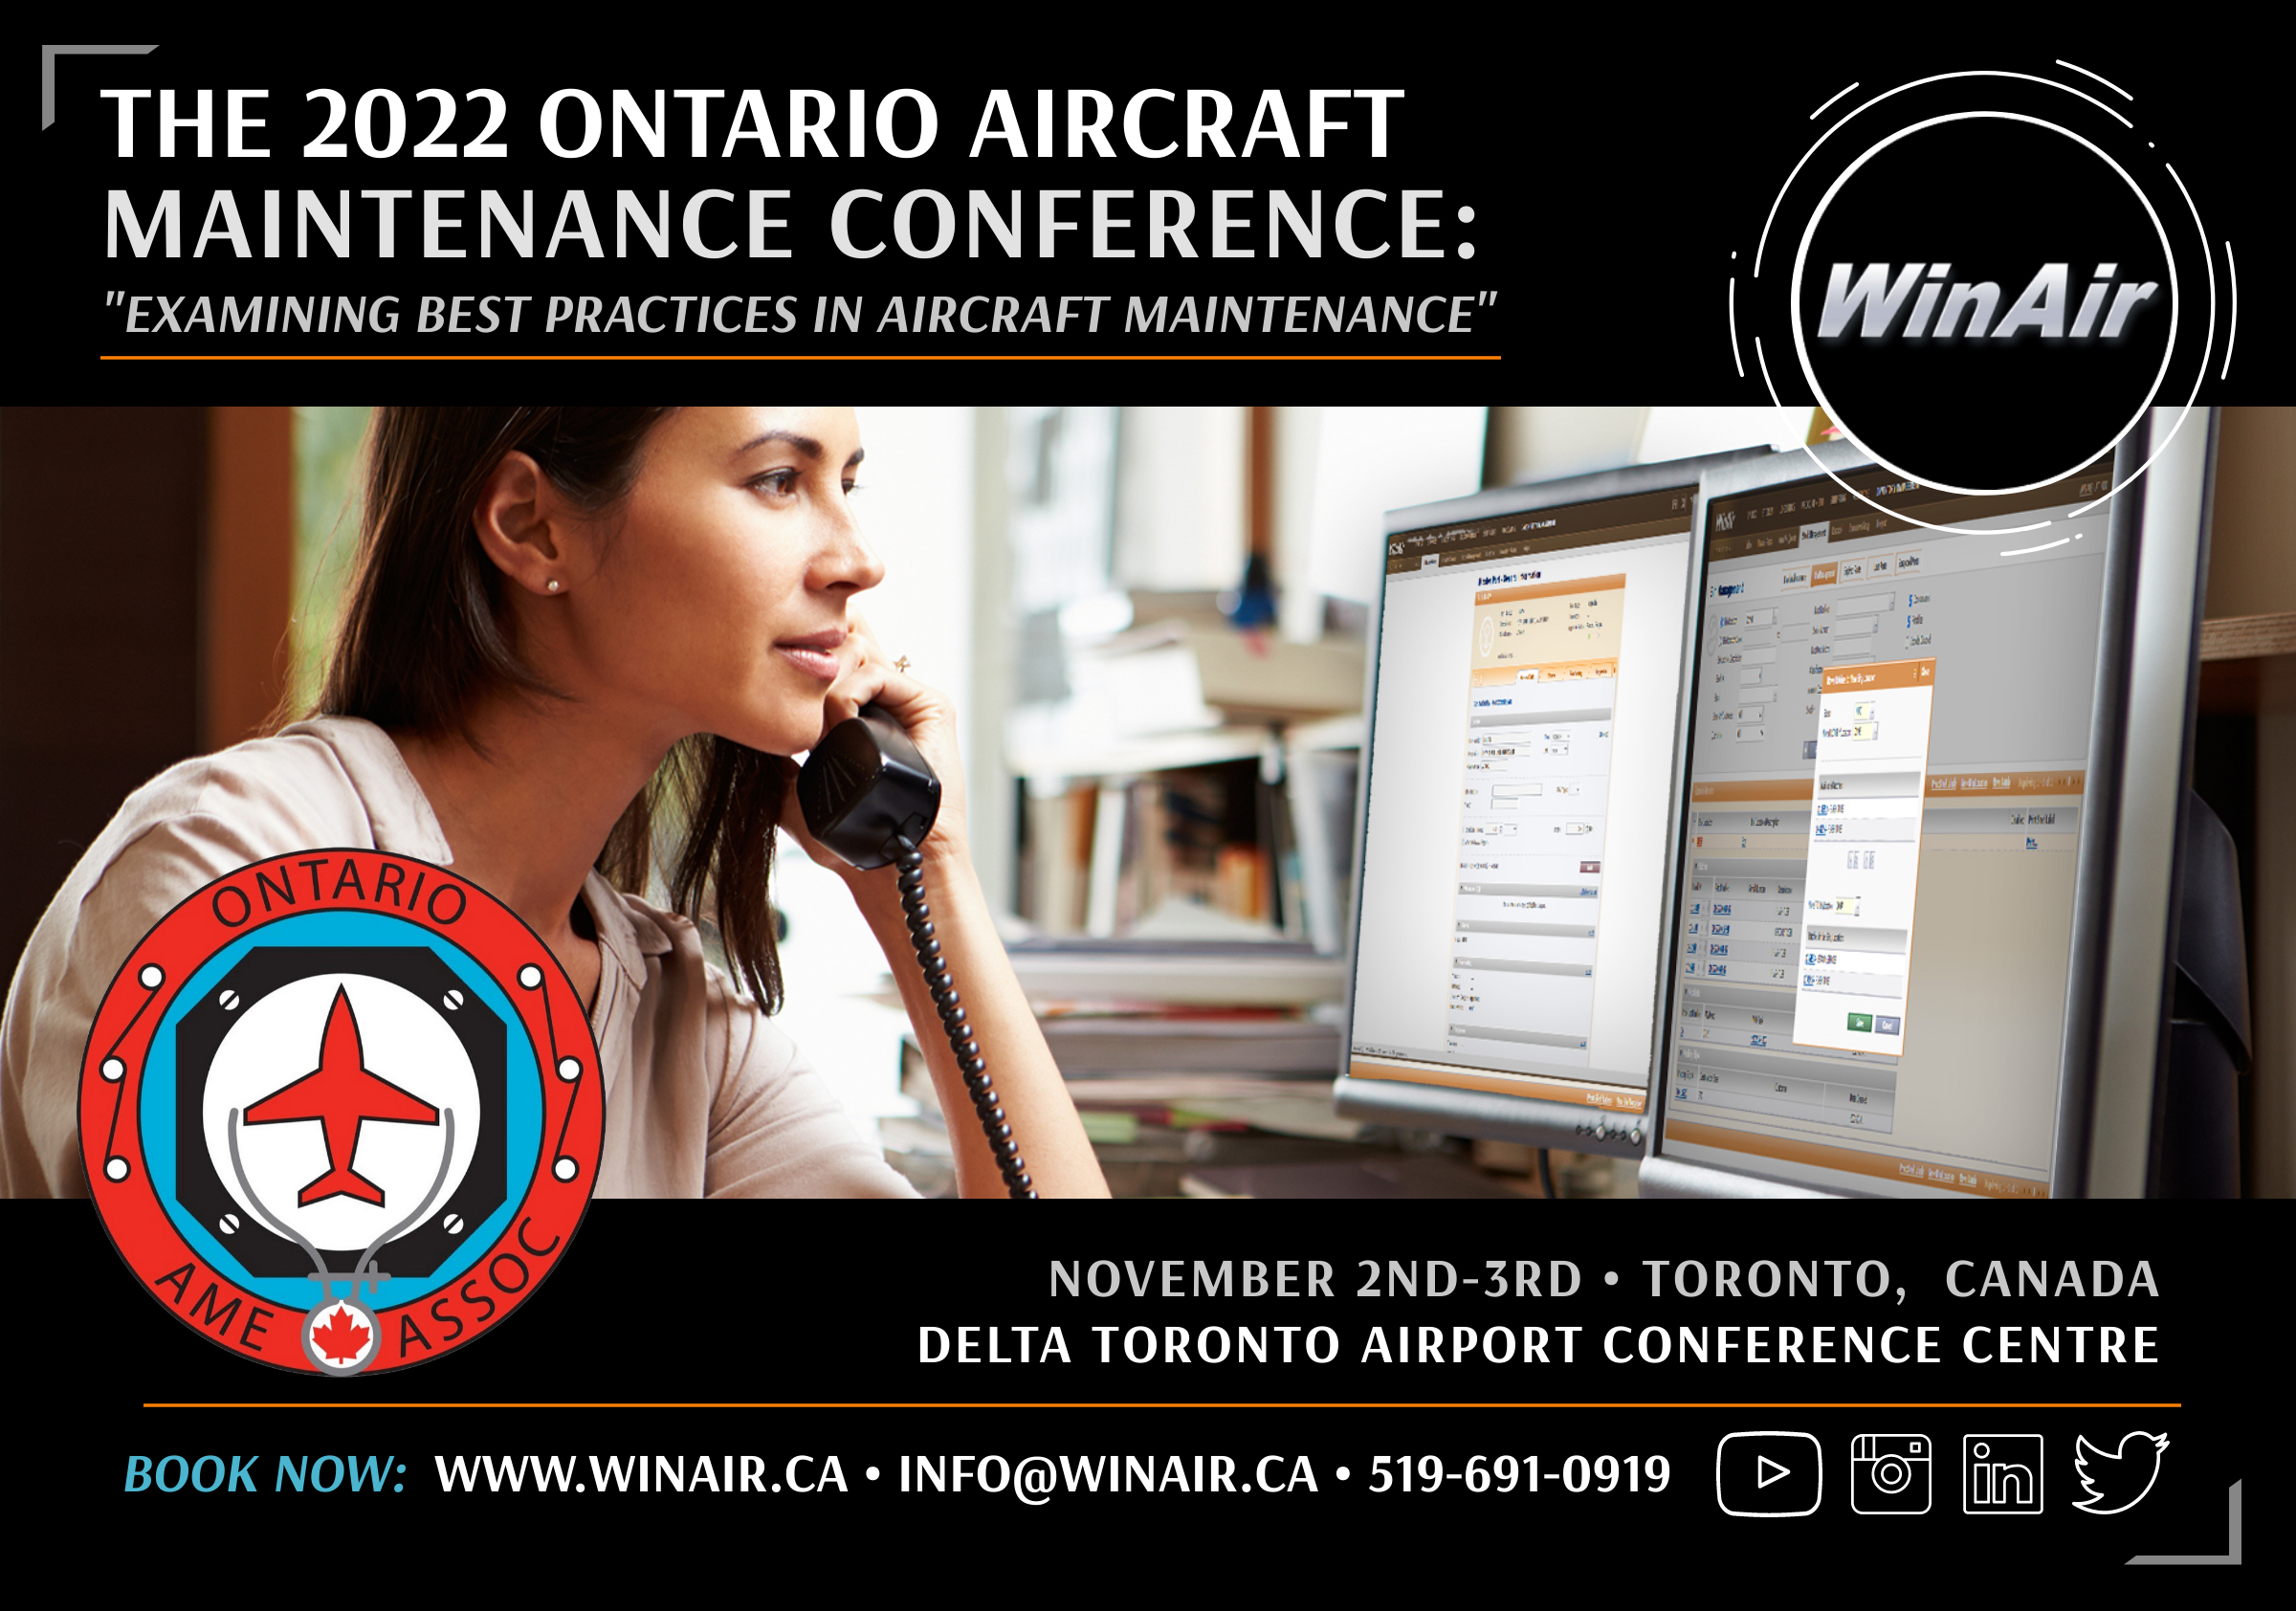 WinAir - The 2022 Ontario Aircraft Maintenance Conference - Press Release Image of WinAir on Computer Monitors